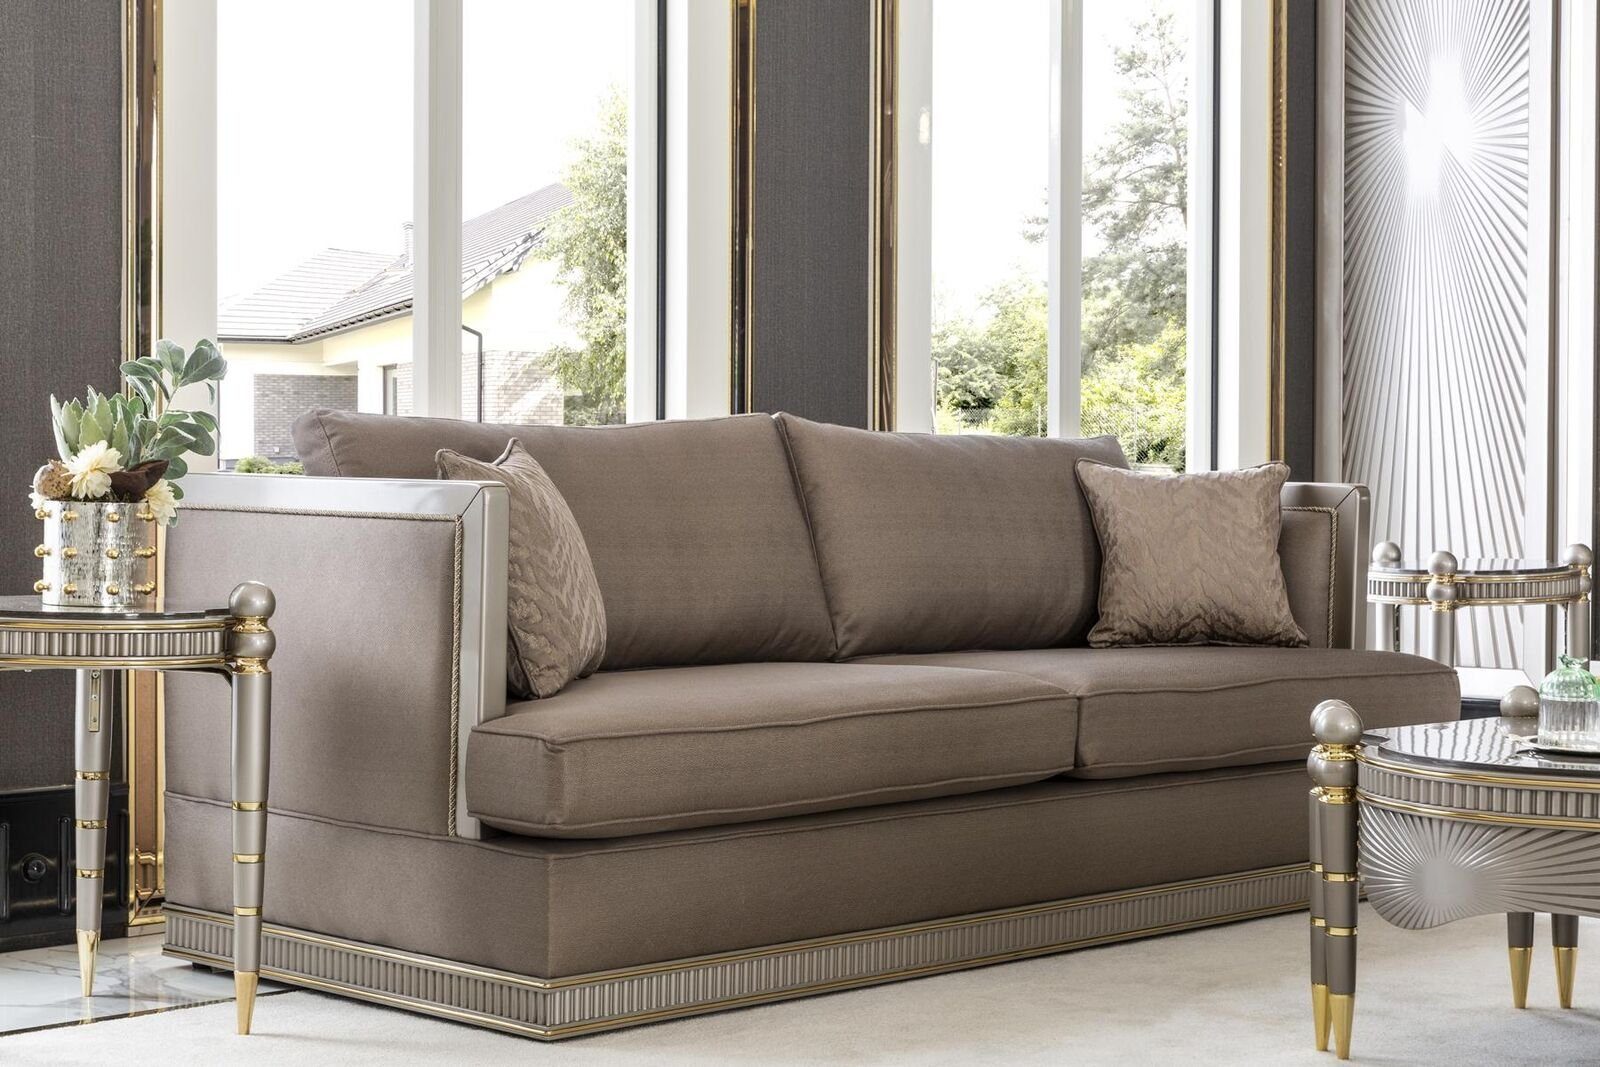 JVmoebel Sofa Luxus Big Couch Dreisitzer xxl Sofa Polster Möbel 260cm Design, Made in Europe